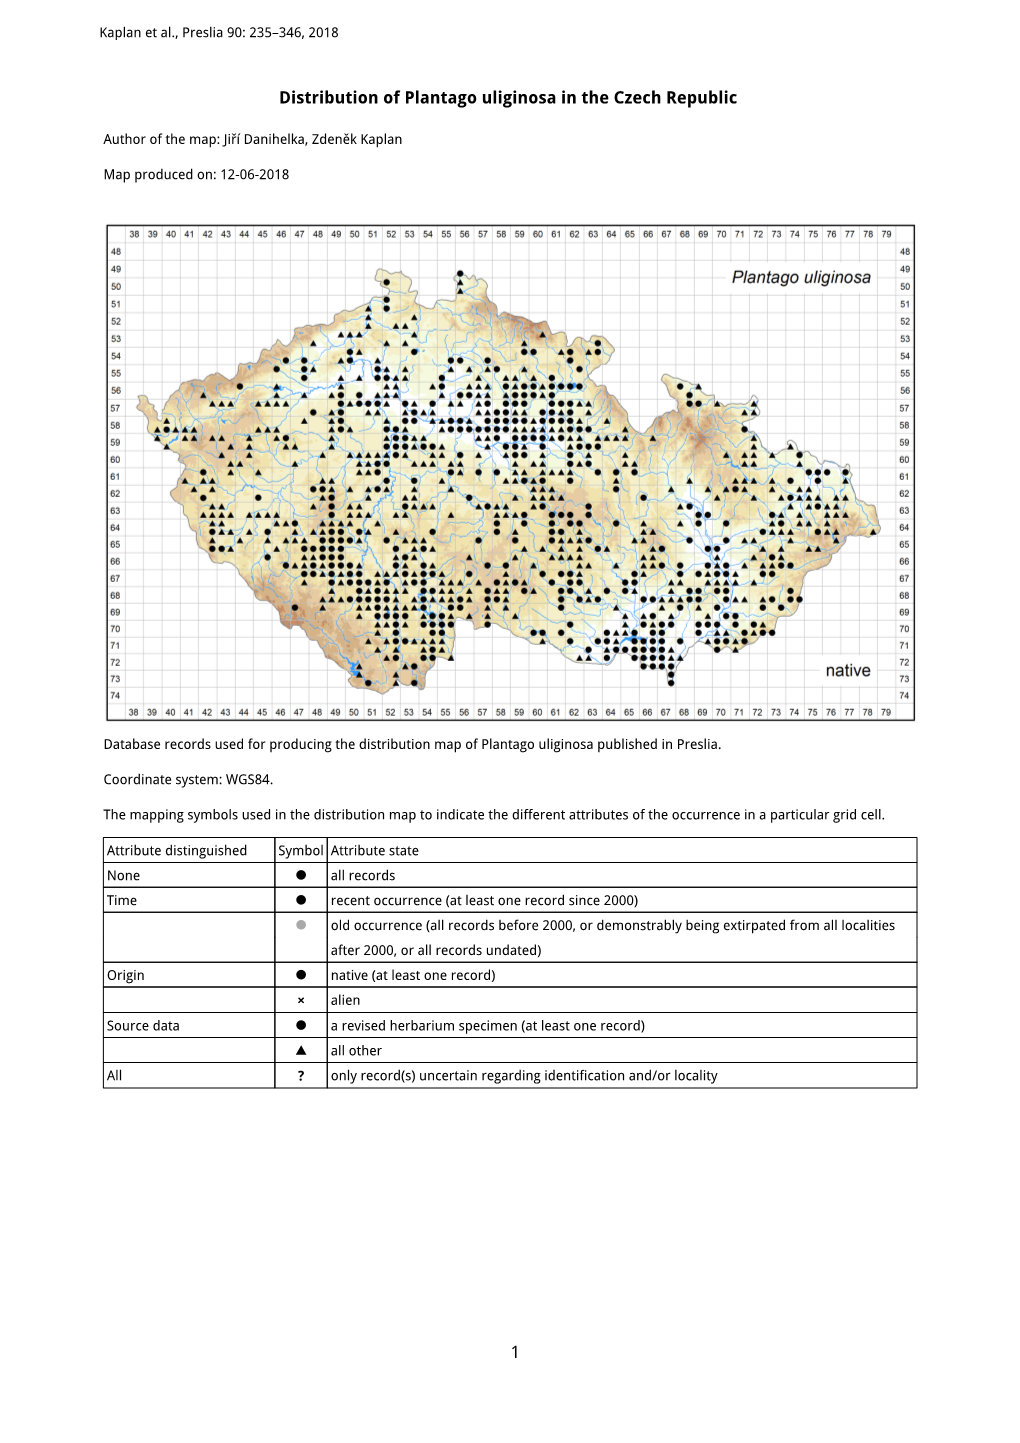 1 Distribution of Plantago Uliginosa in the Czech Republic